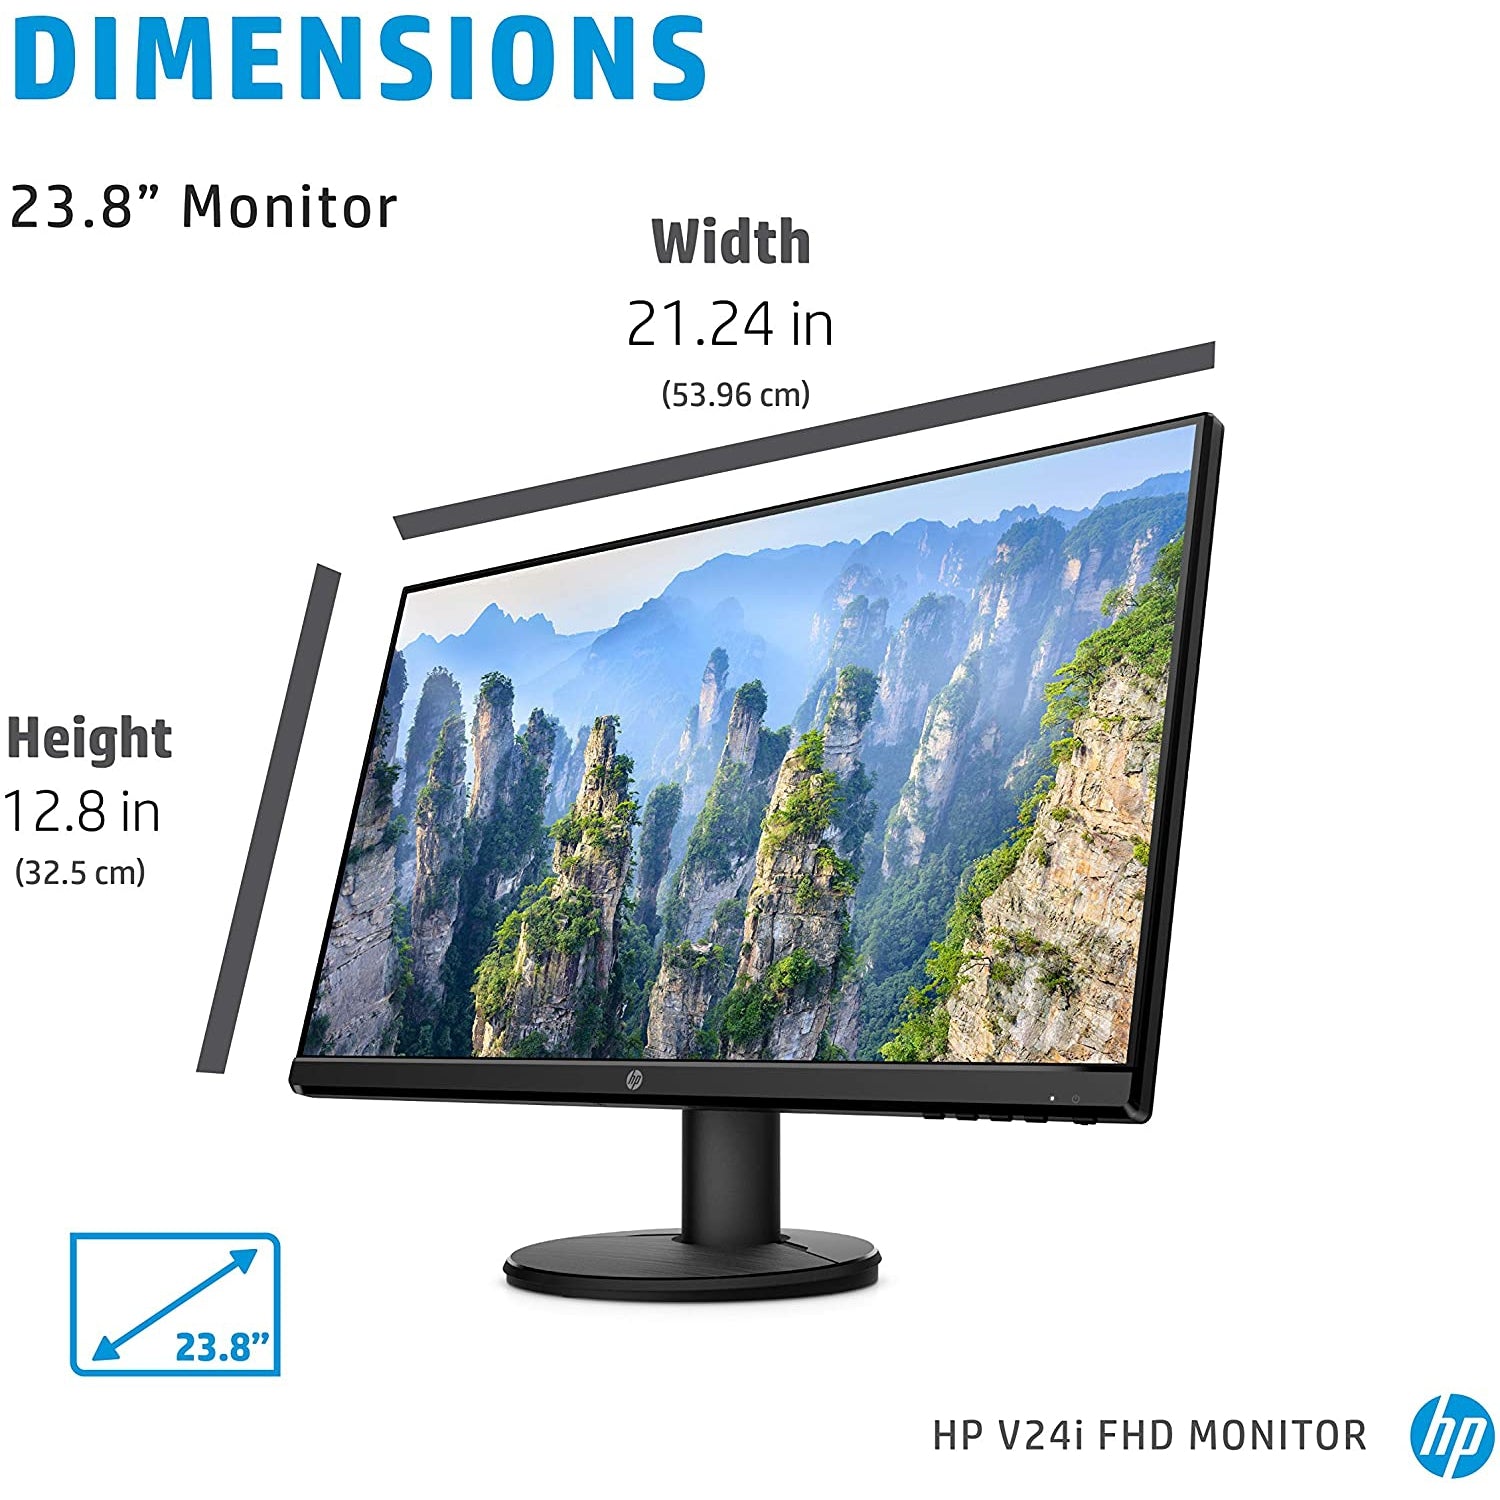 HP v24i Full HD Monitor 1920 x 1080 23.8 Inch Monitor (1 VGA, 1 HDMI) - Black